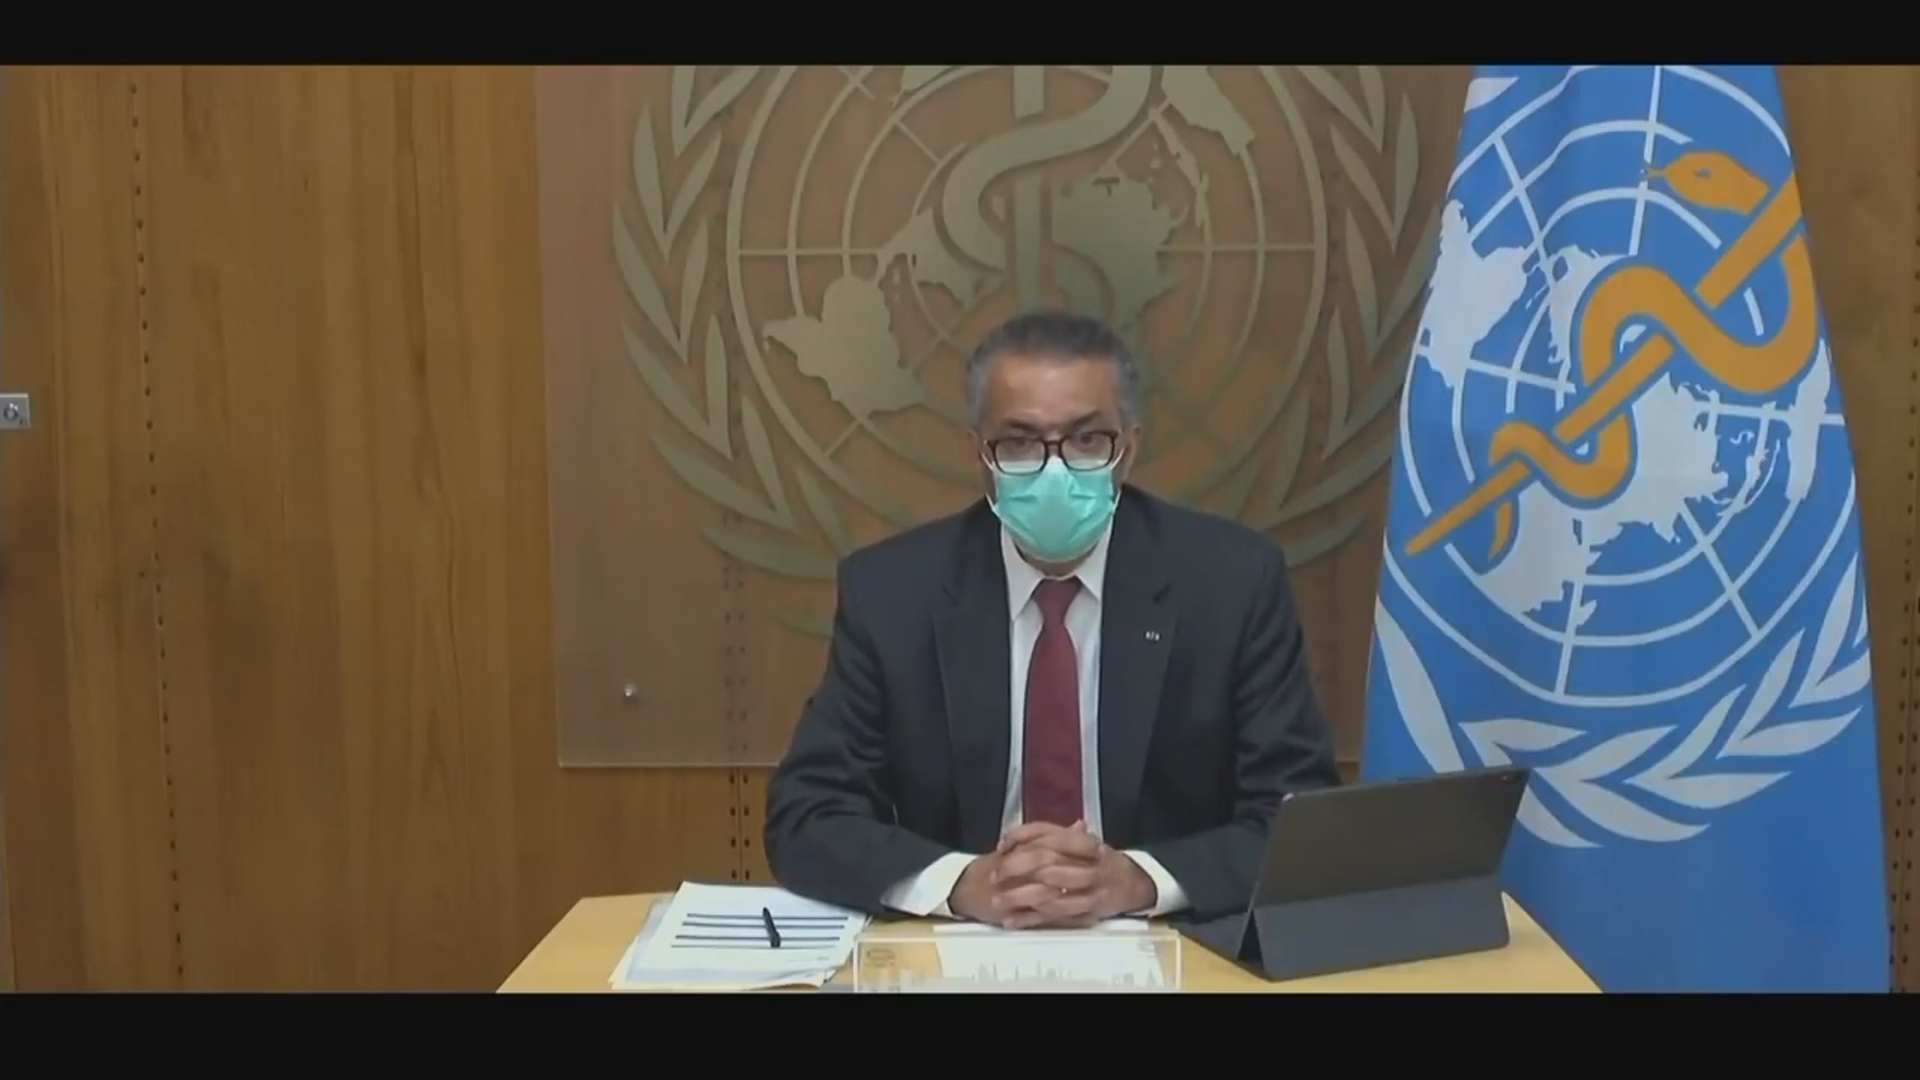 Dr. Tedros Adhanom Ghebreyesus-Director-General, World Health Organization speaking at a virtual event